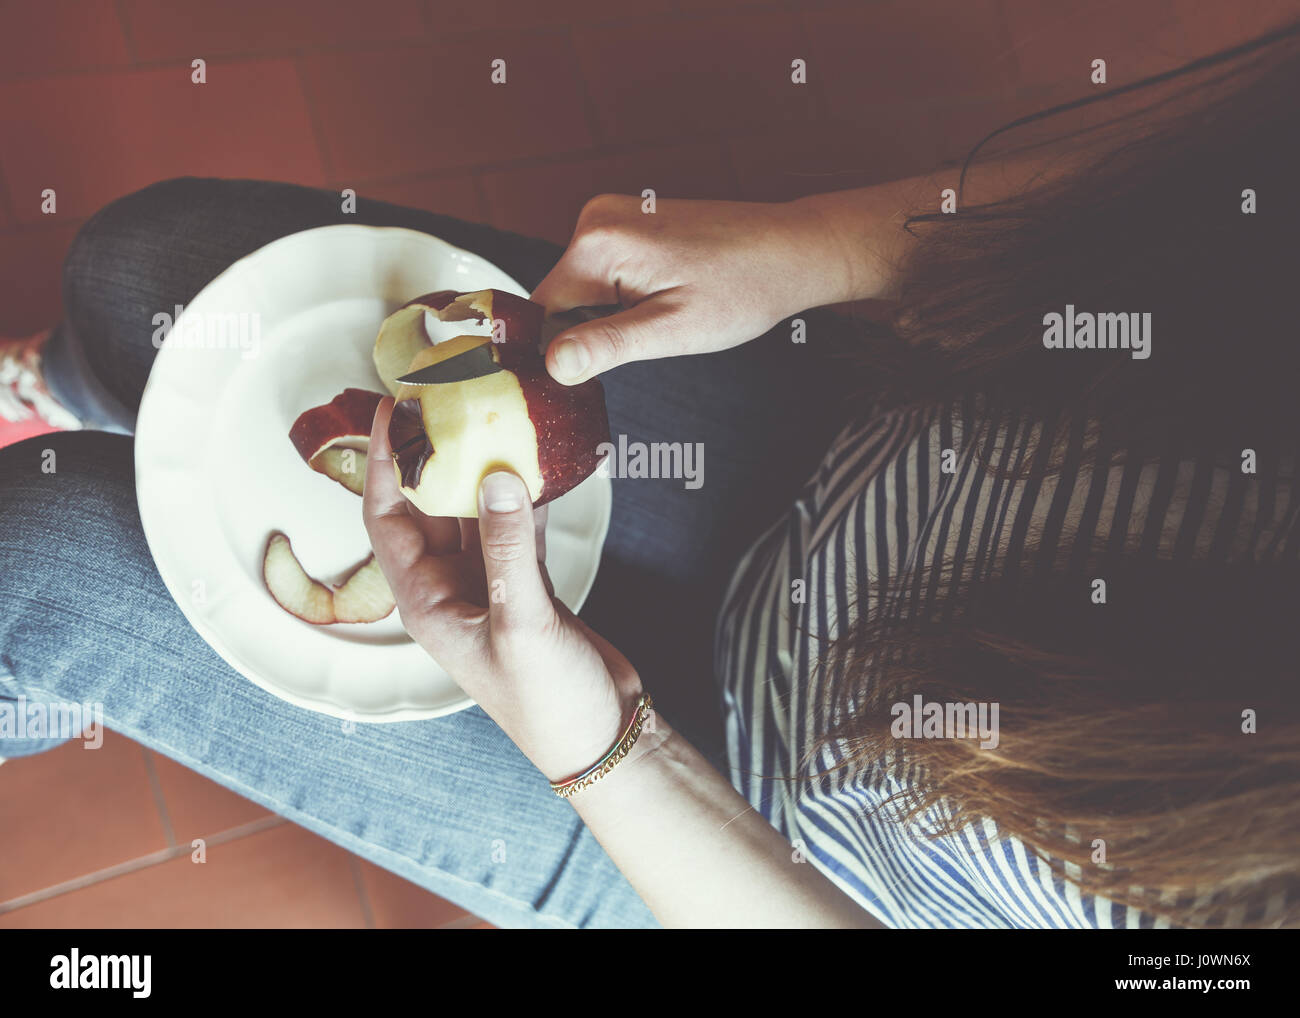 Girl peeling an apple Stock Photo